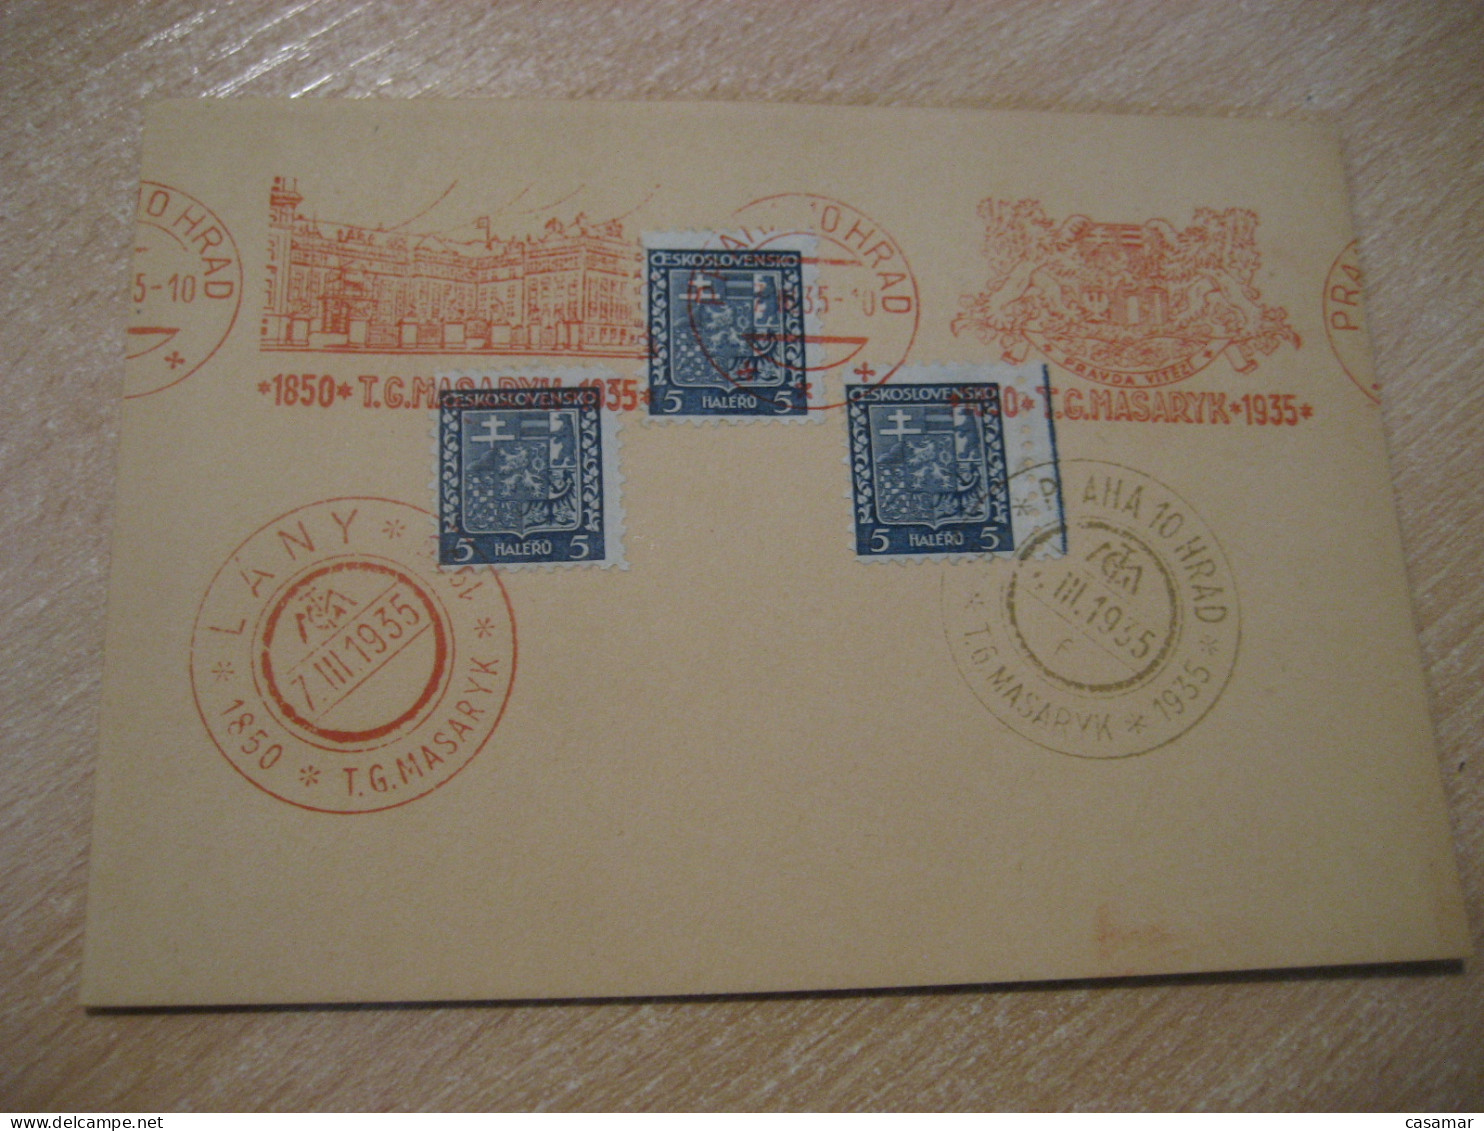 PRAGA 1935 Lany T. G. Masaryk 1850 1935 Meter Mail Cancel Card CZECHOSLOVAKIA - Cartas & Documentos